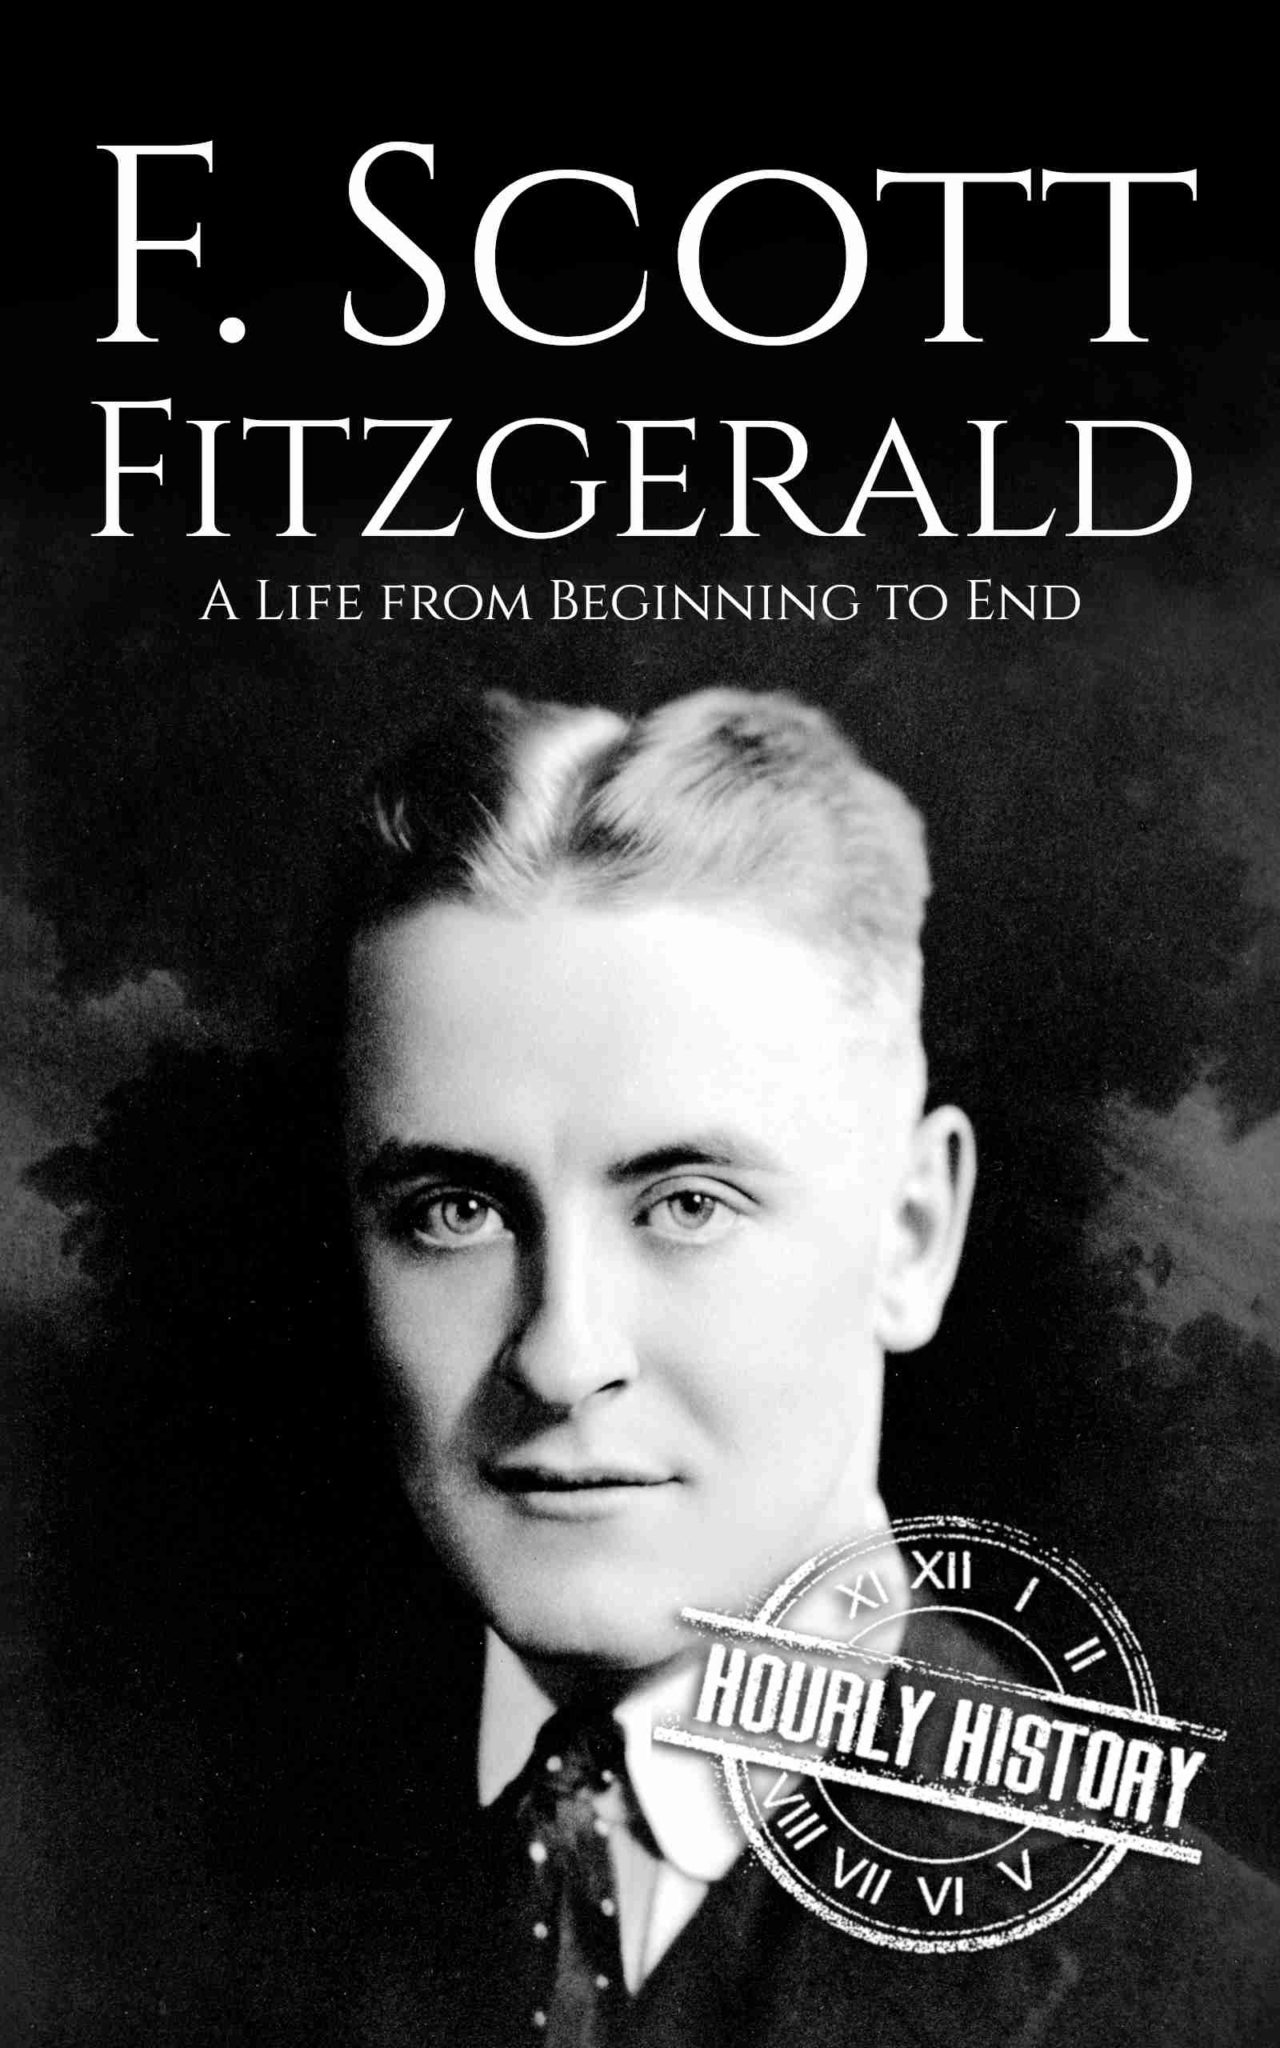 fitzgerald short biography